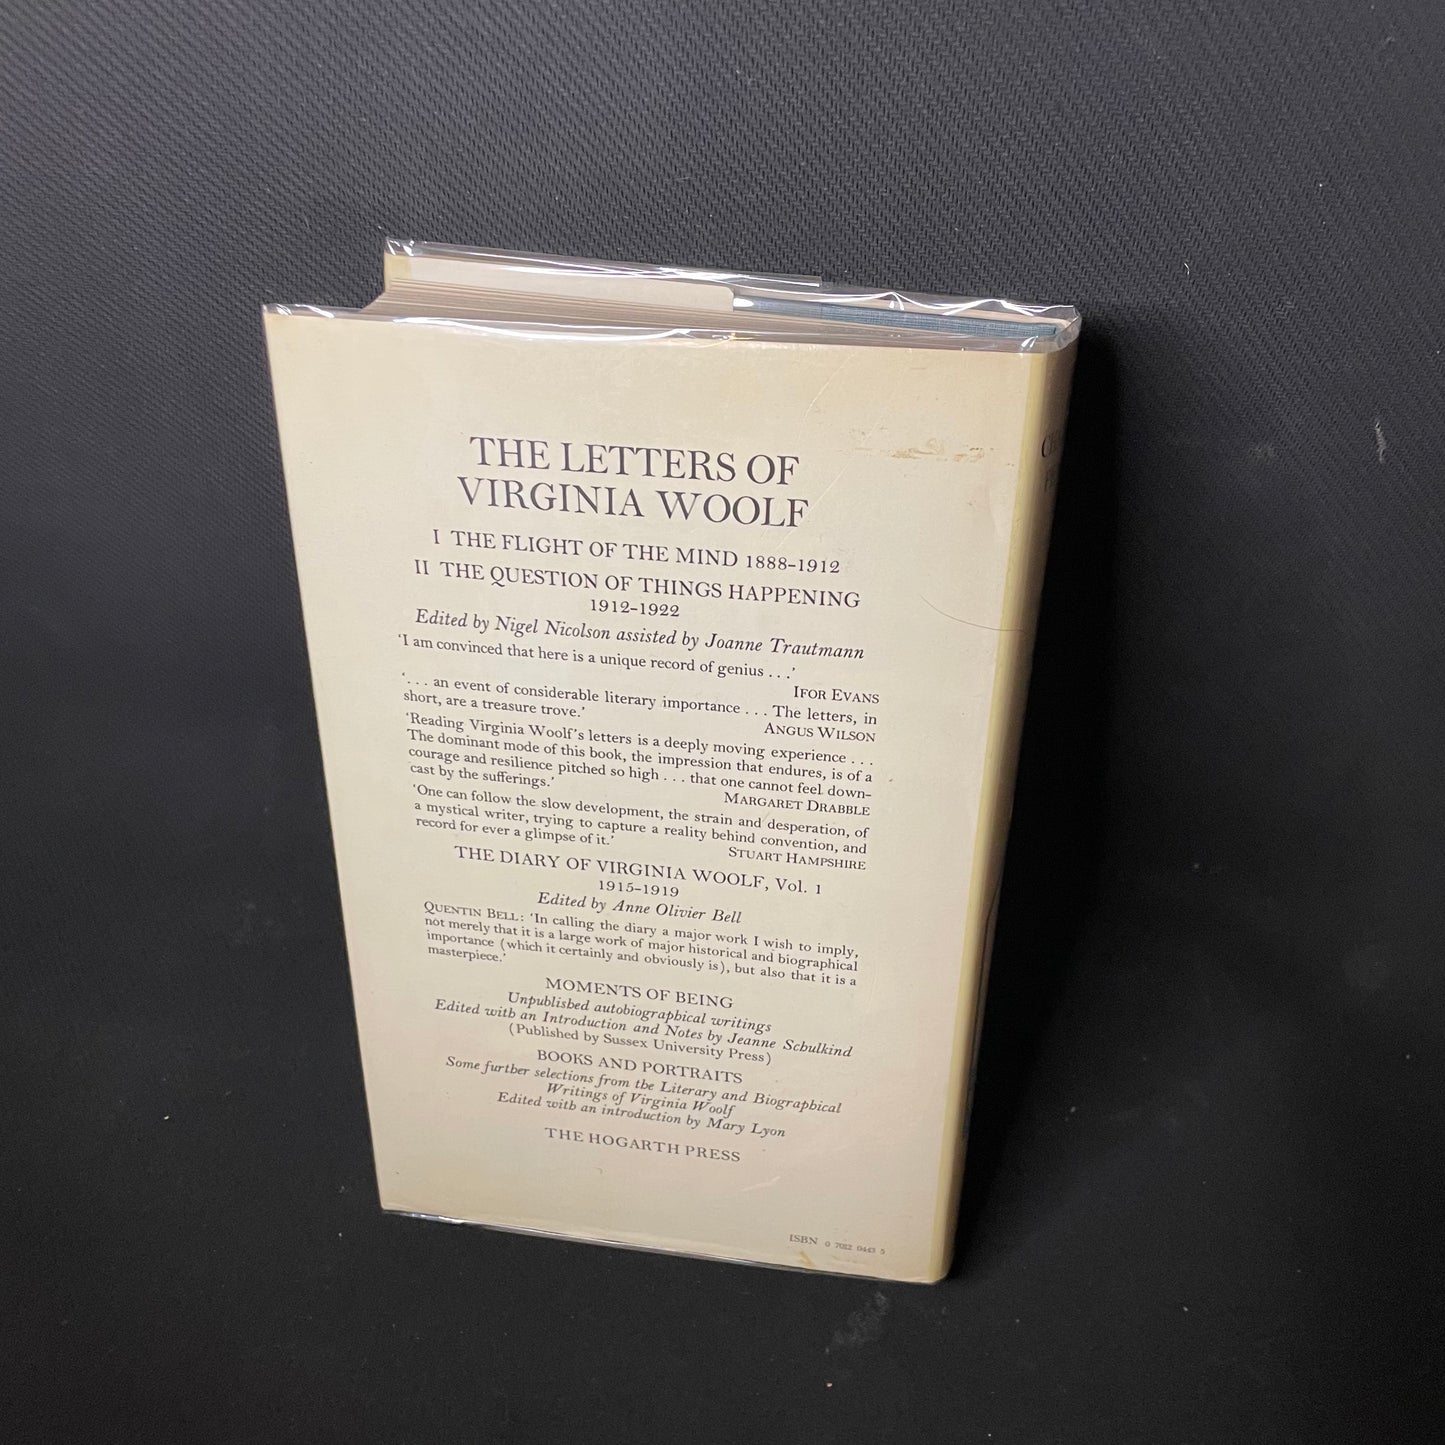 The Letters of Virginia Woolf, edited by Nigel Nicolson